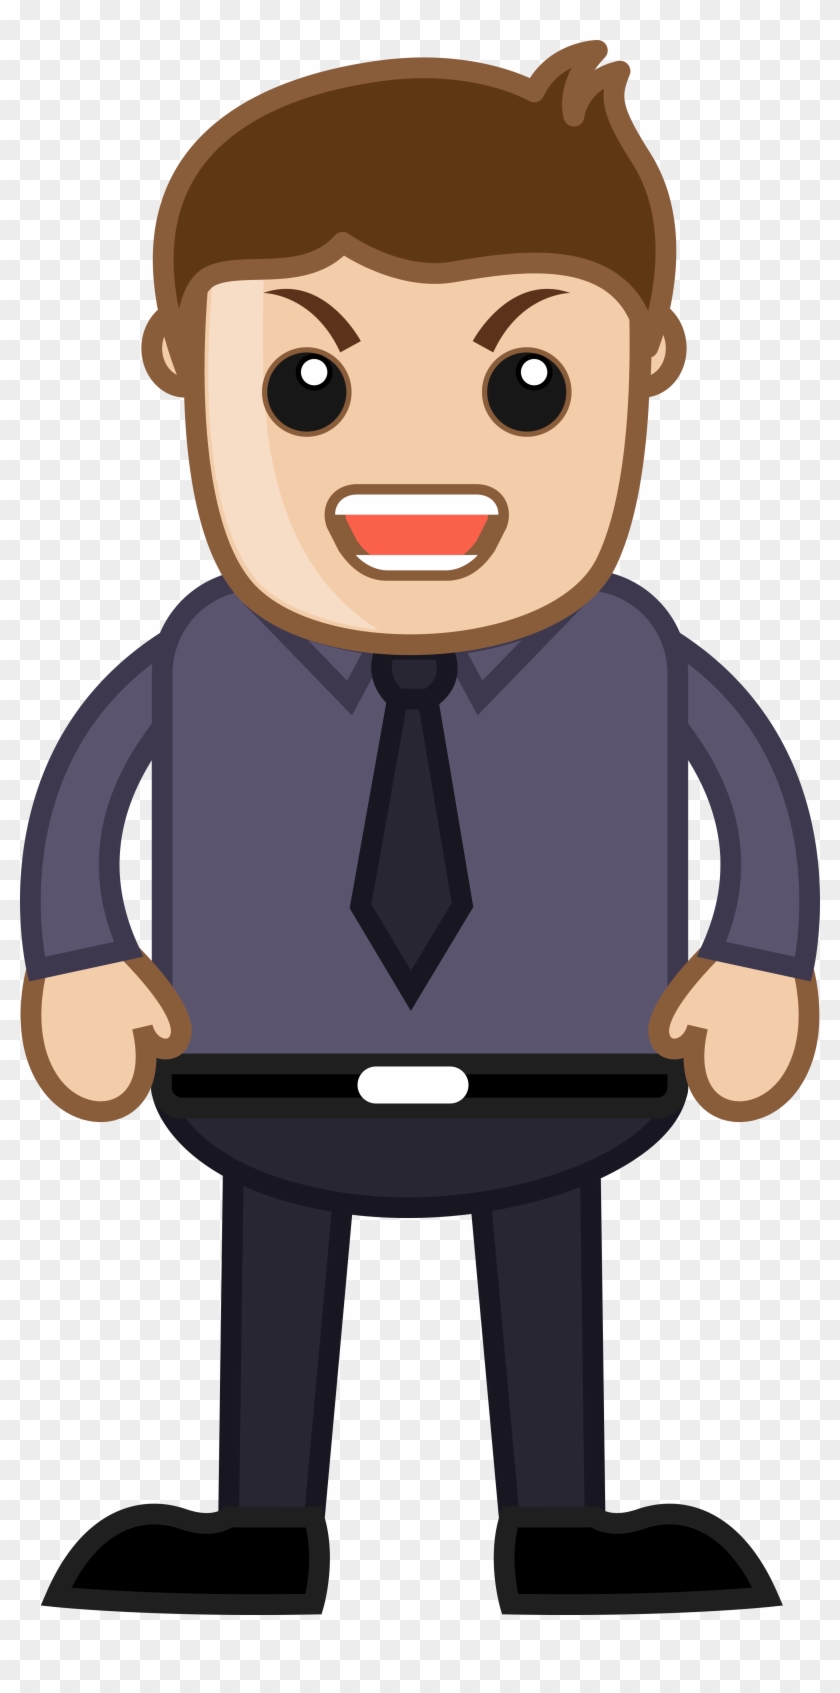 Angry Man Office Corporate Cartoon People Gyozrko - Angry Man Cartoon Png #1297744